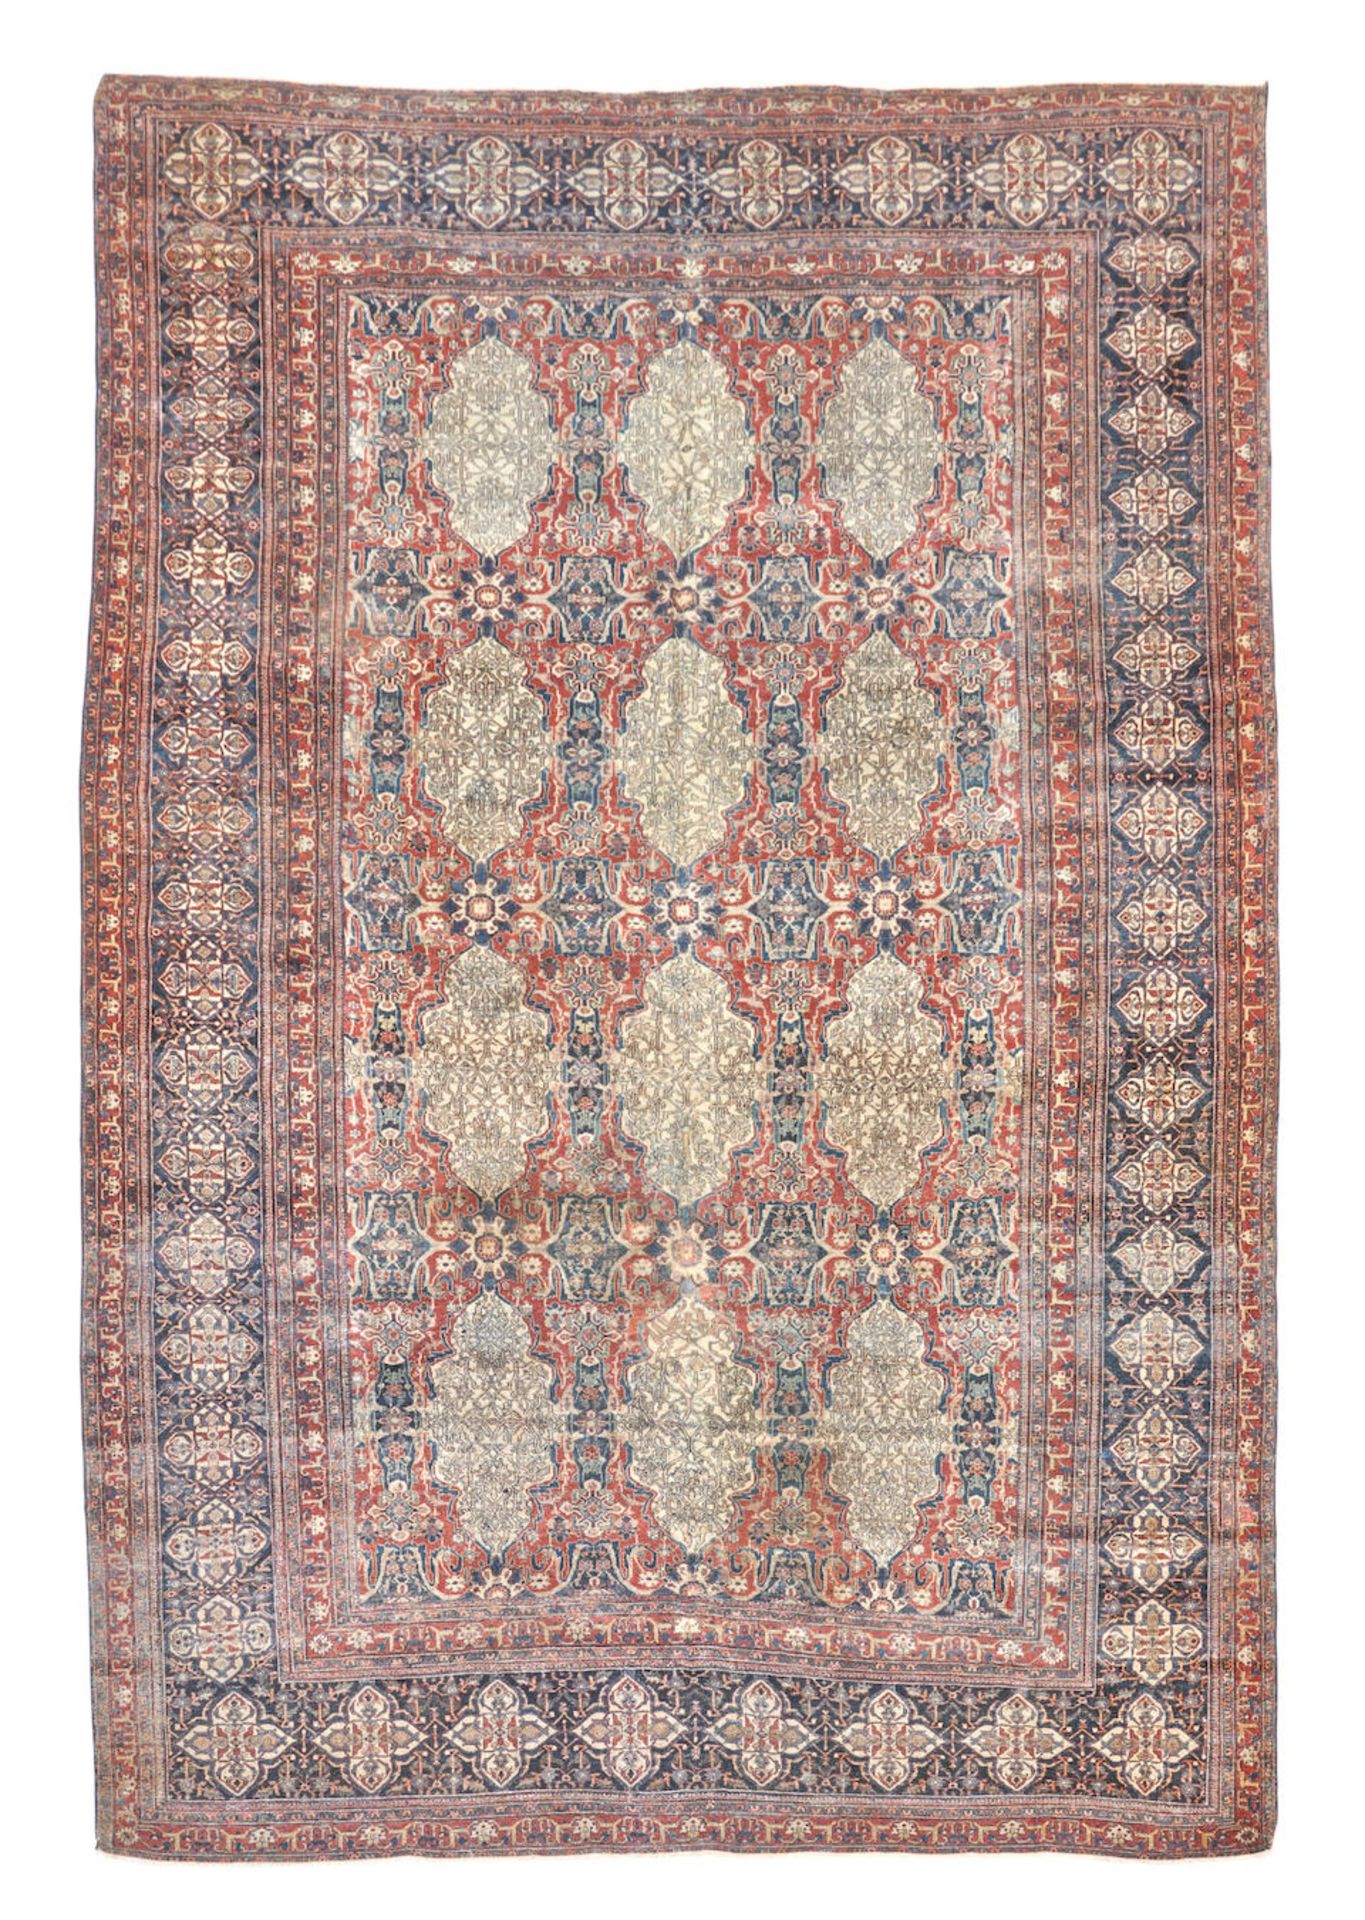 Mohtasham Kashan Carpet Iran 7 ft. 4 in. x 11 ft.